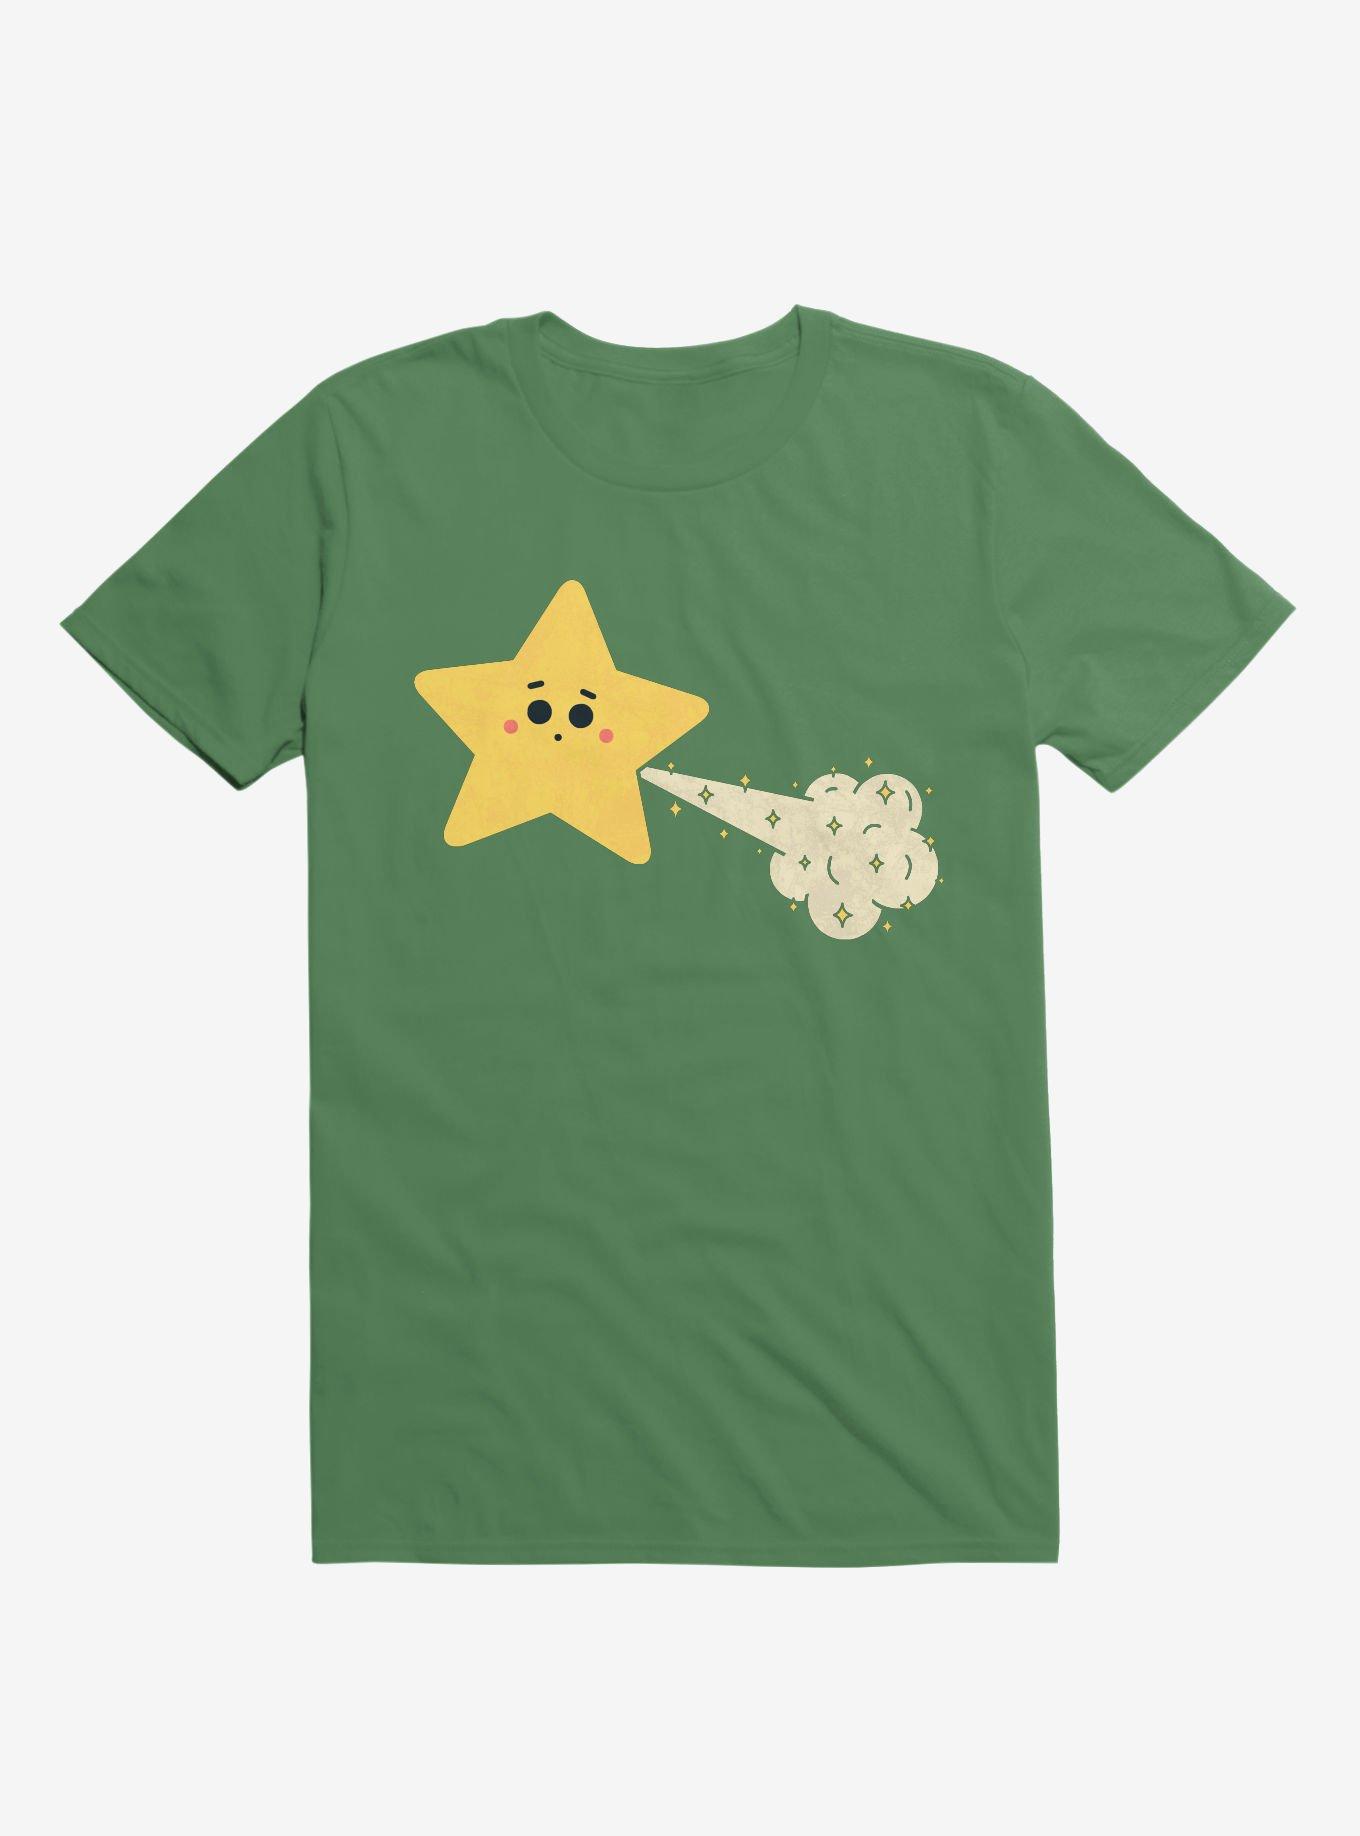 Sparkle Tooting Star Irish Green T-Shirt